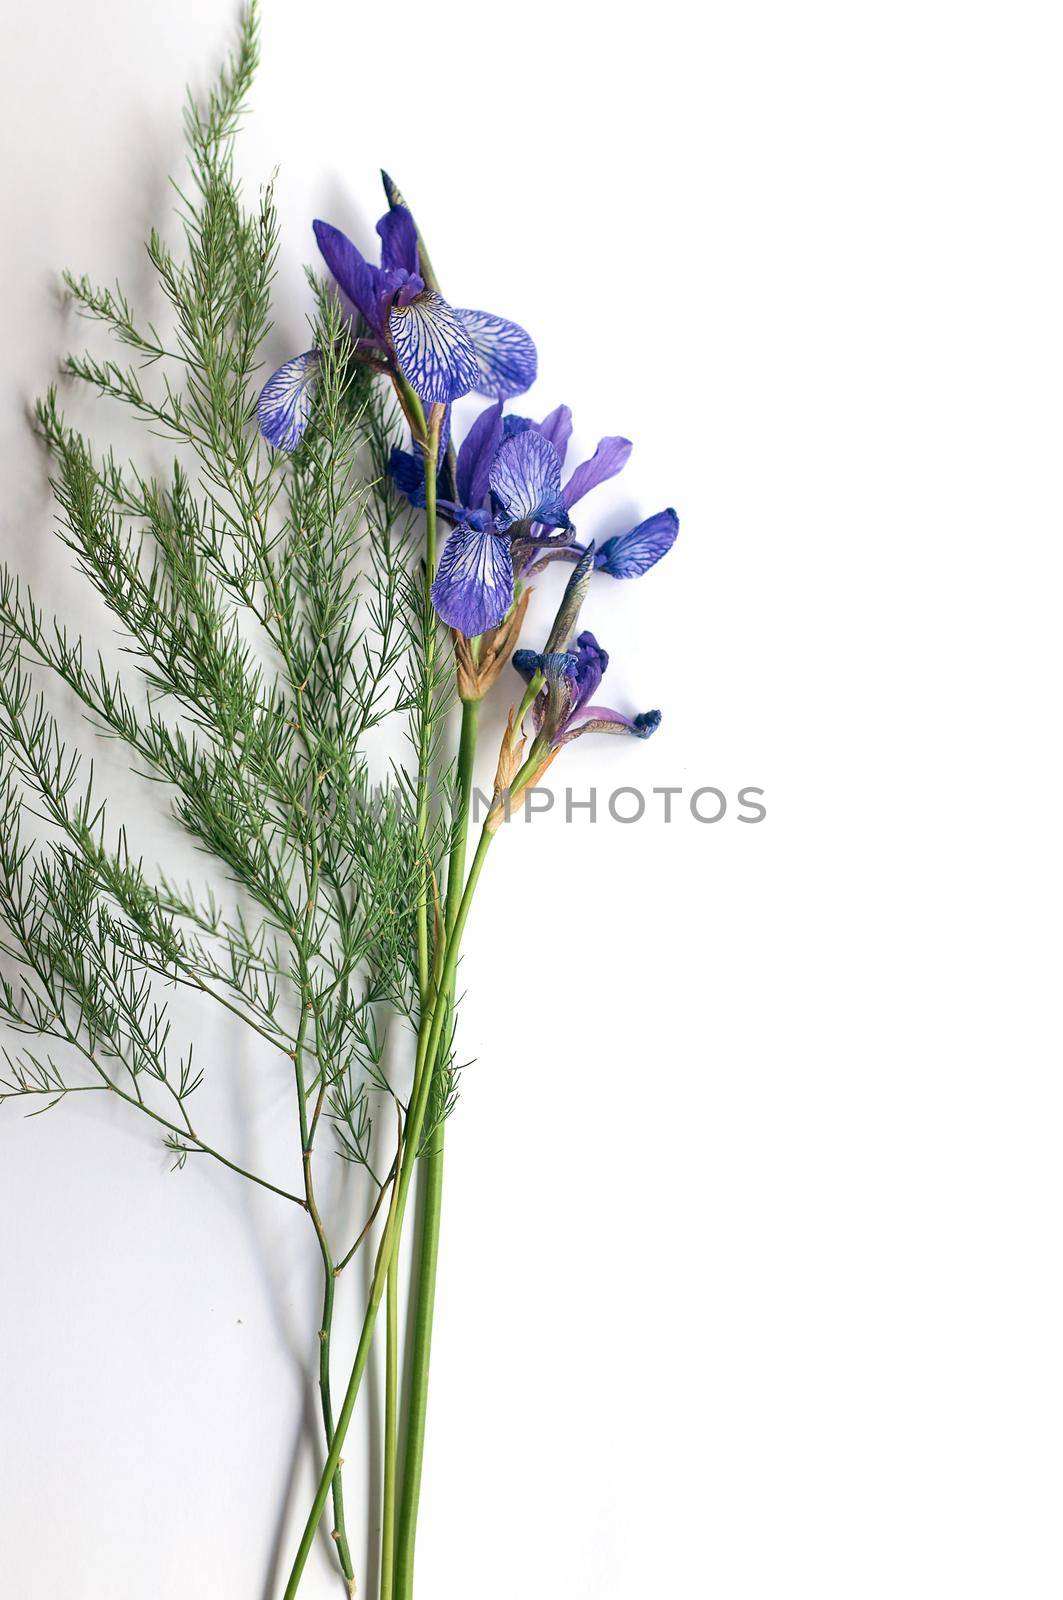 bouquet of wild purple iris flowers on a white paper by ozornina